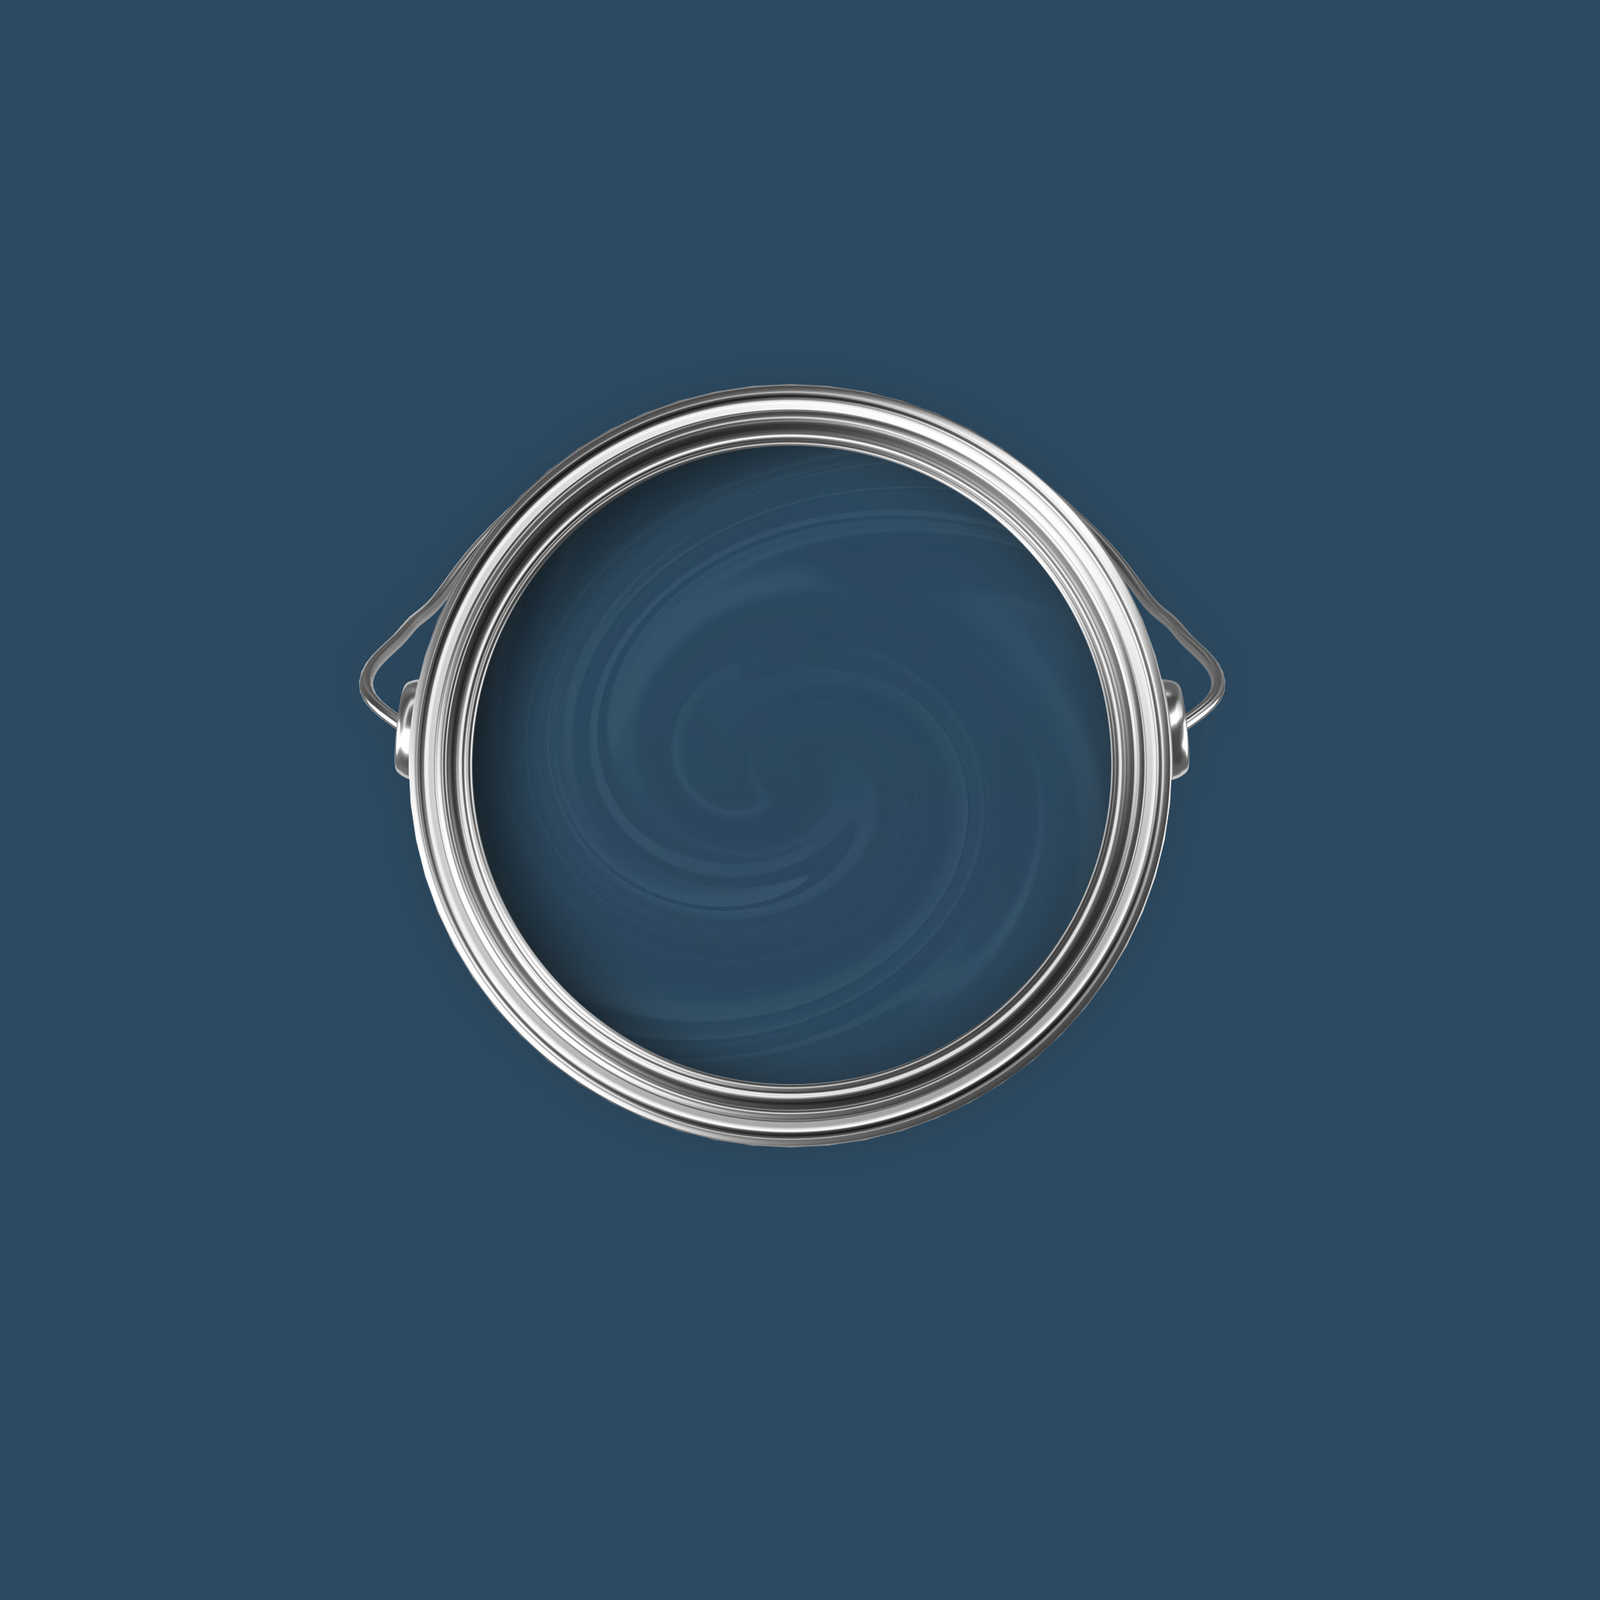             Premium Wandfarbe edles Dunkelblau »Blissful Blue« NW308 – 2,5 Liter
        